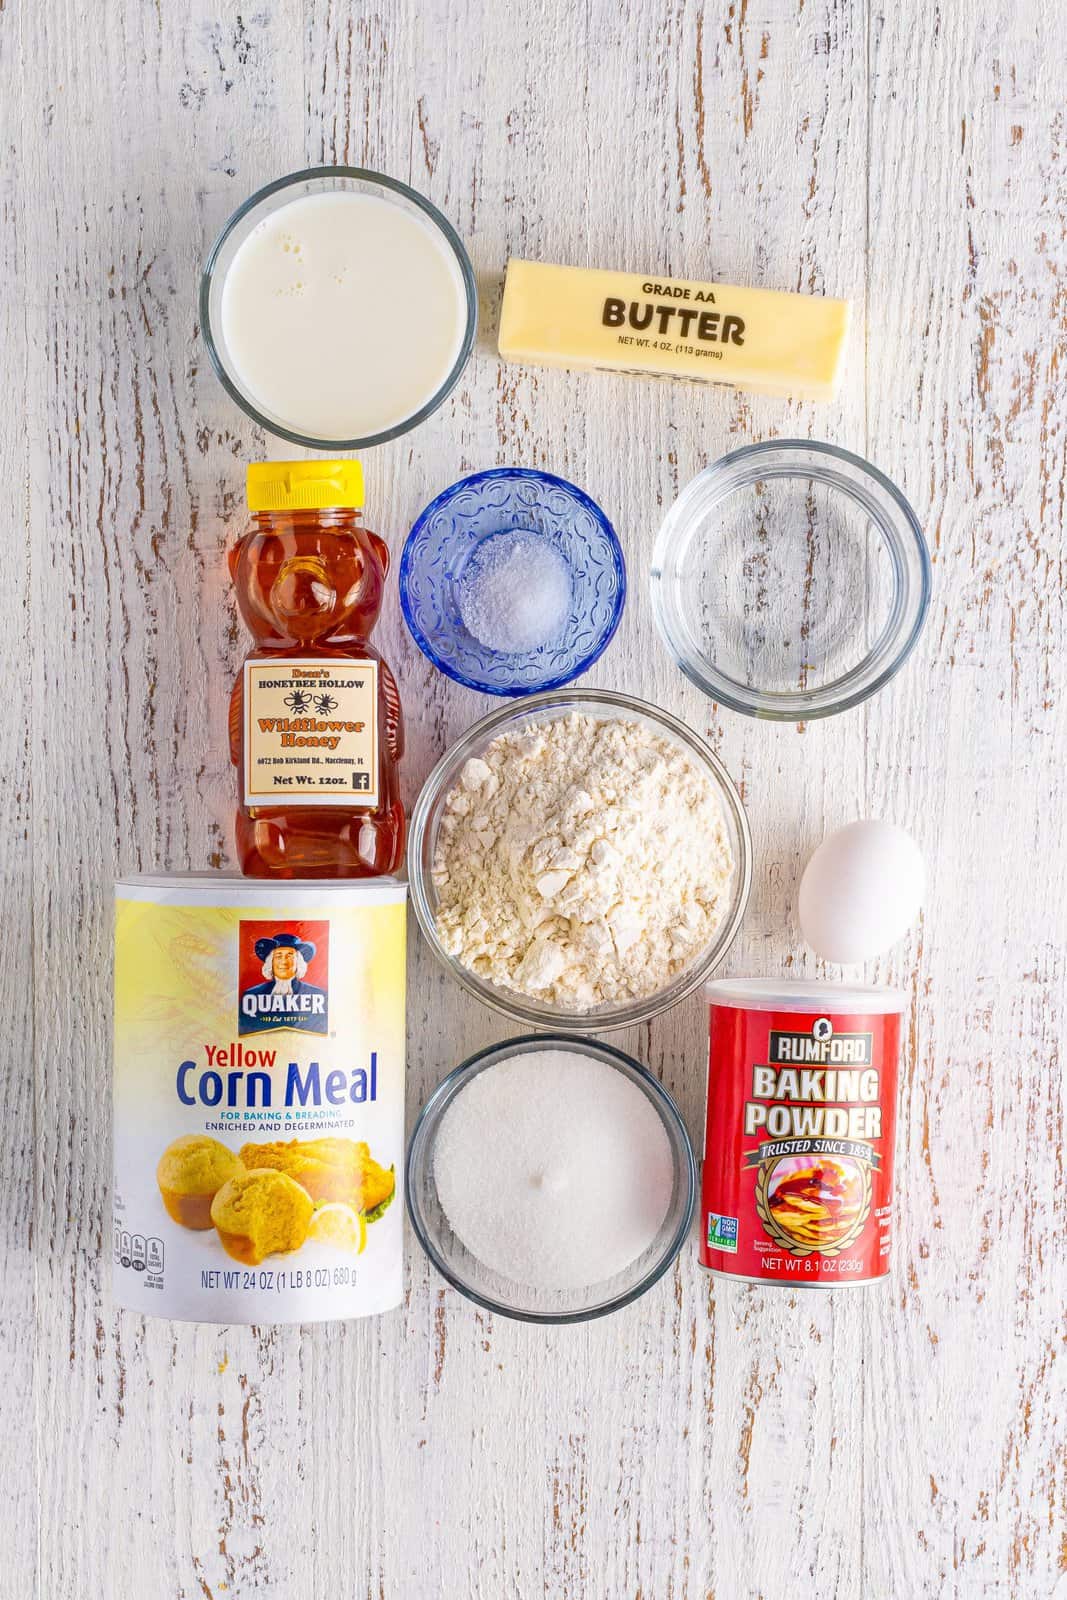 Yellow cornmeal, egg, butter, all purpose flour, sugar, salt, honey, milk, water, and baking powder.